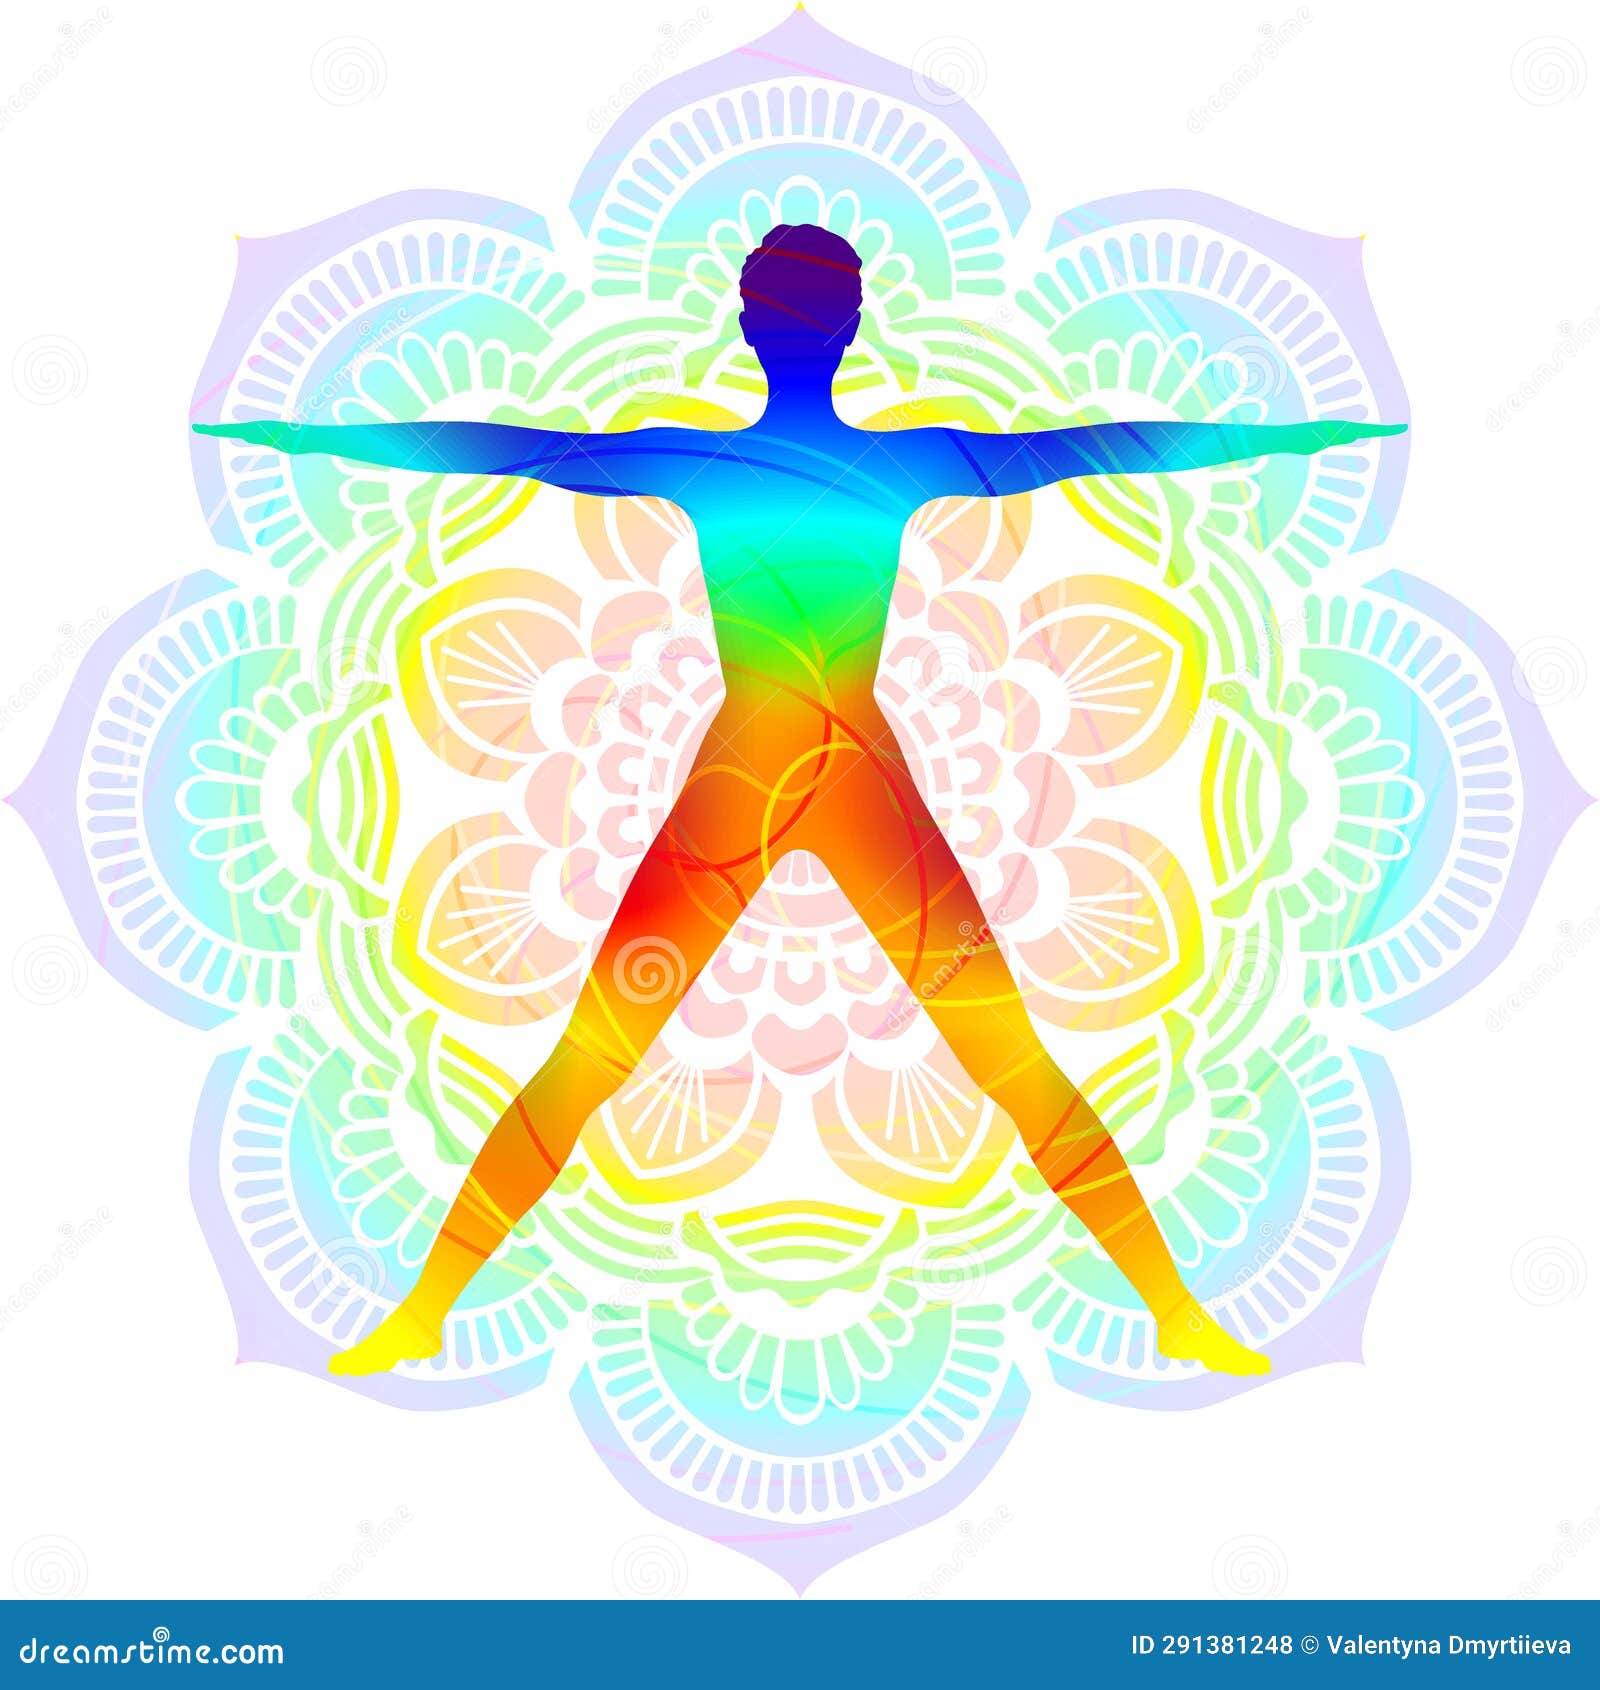 utthita tadasana mandala background colorful silhouette yoga posture star pose five pointed star pose utthita tadasana standing 291381248